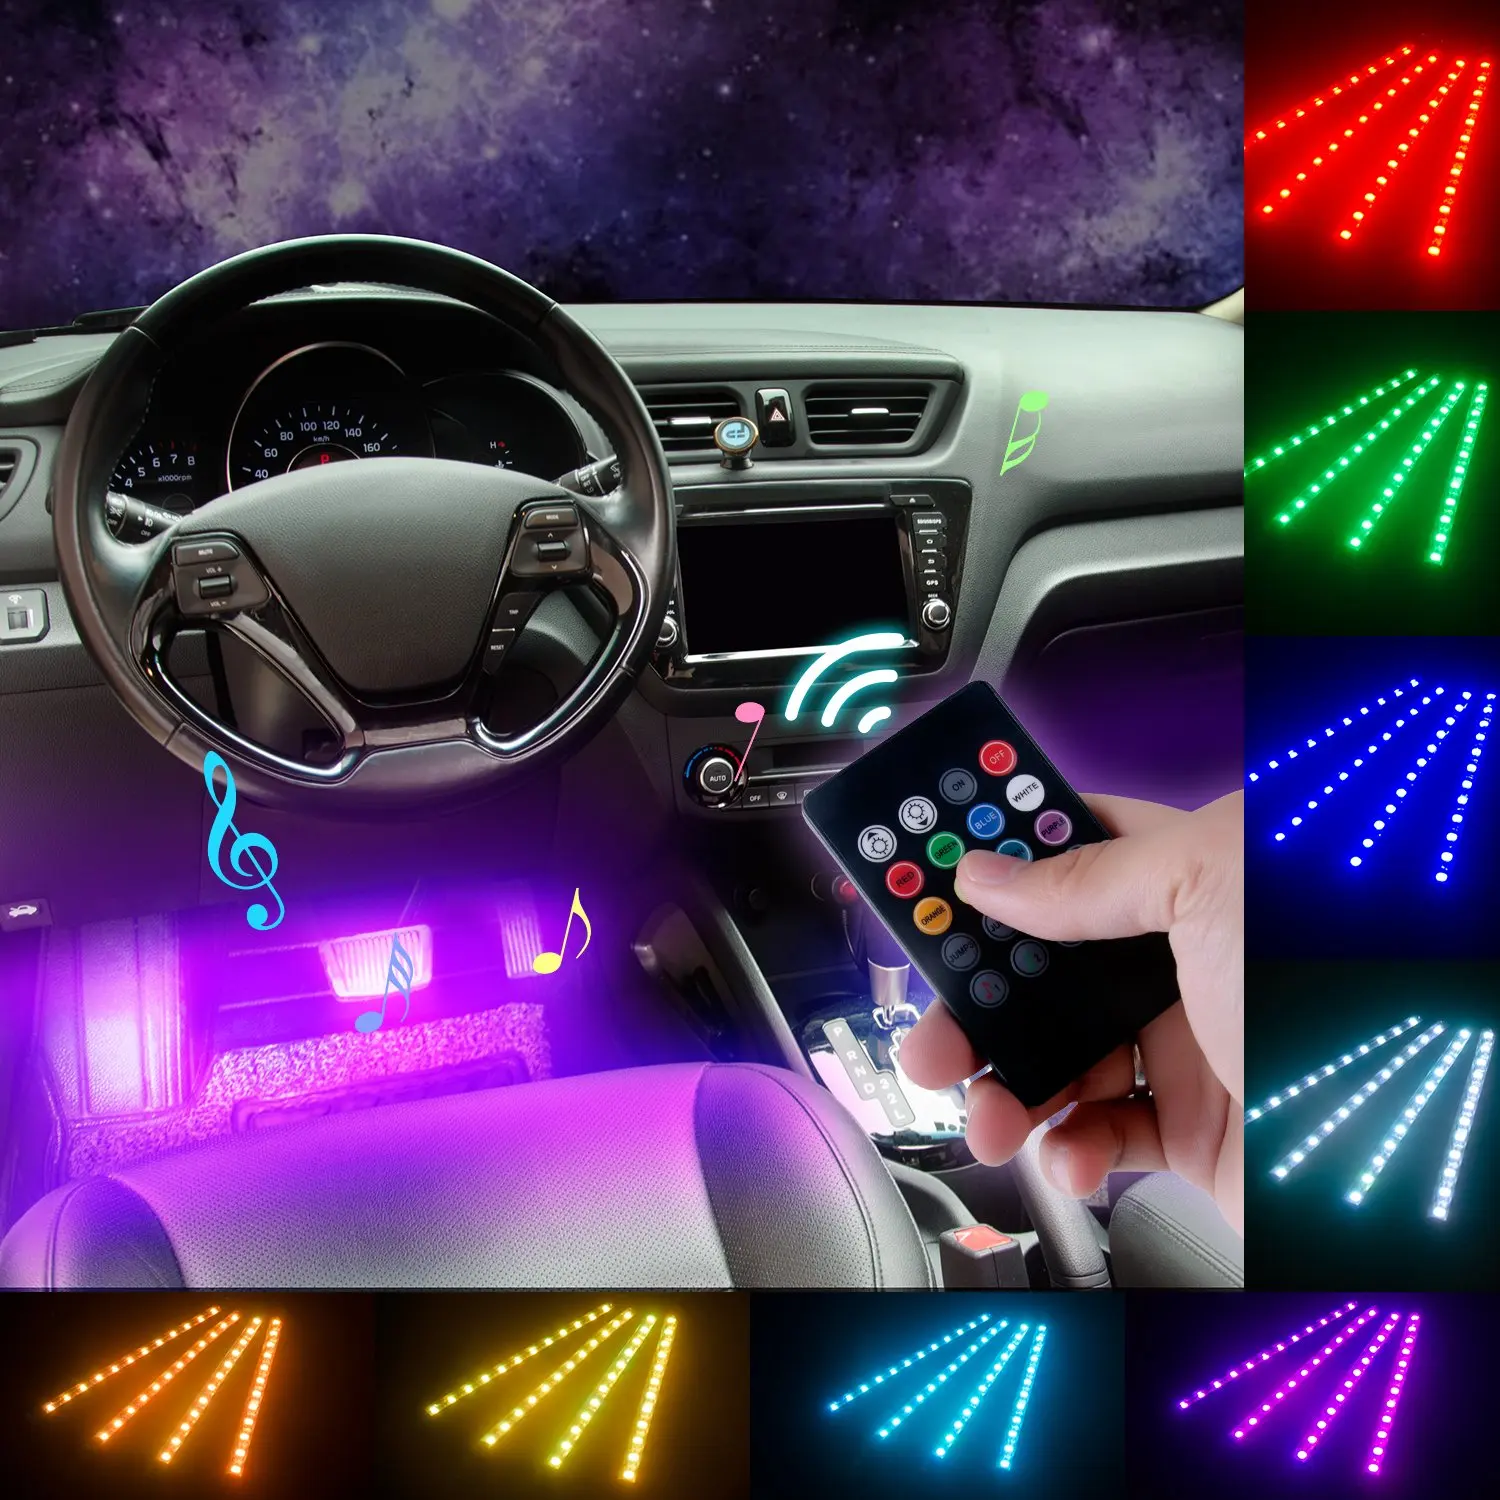 

4pcs 48 LEDs Car Strip Lights RGB Music Activated Automobile Interior Decoration Light Bars DC 12V Power Wireless Remote Control